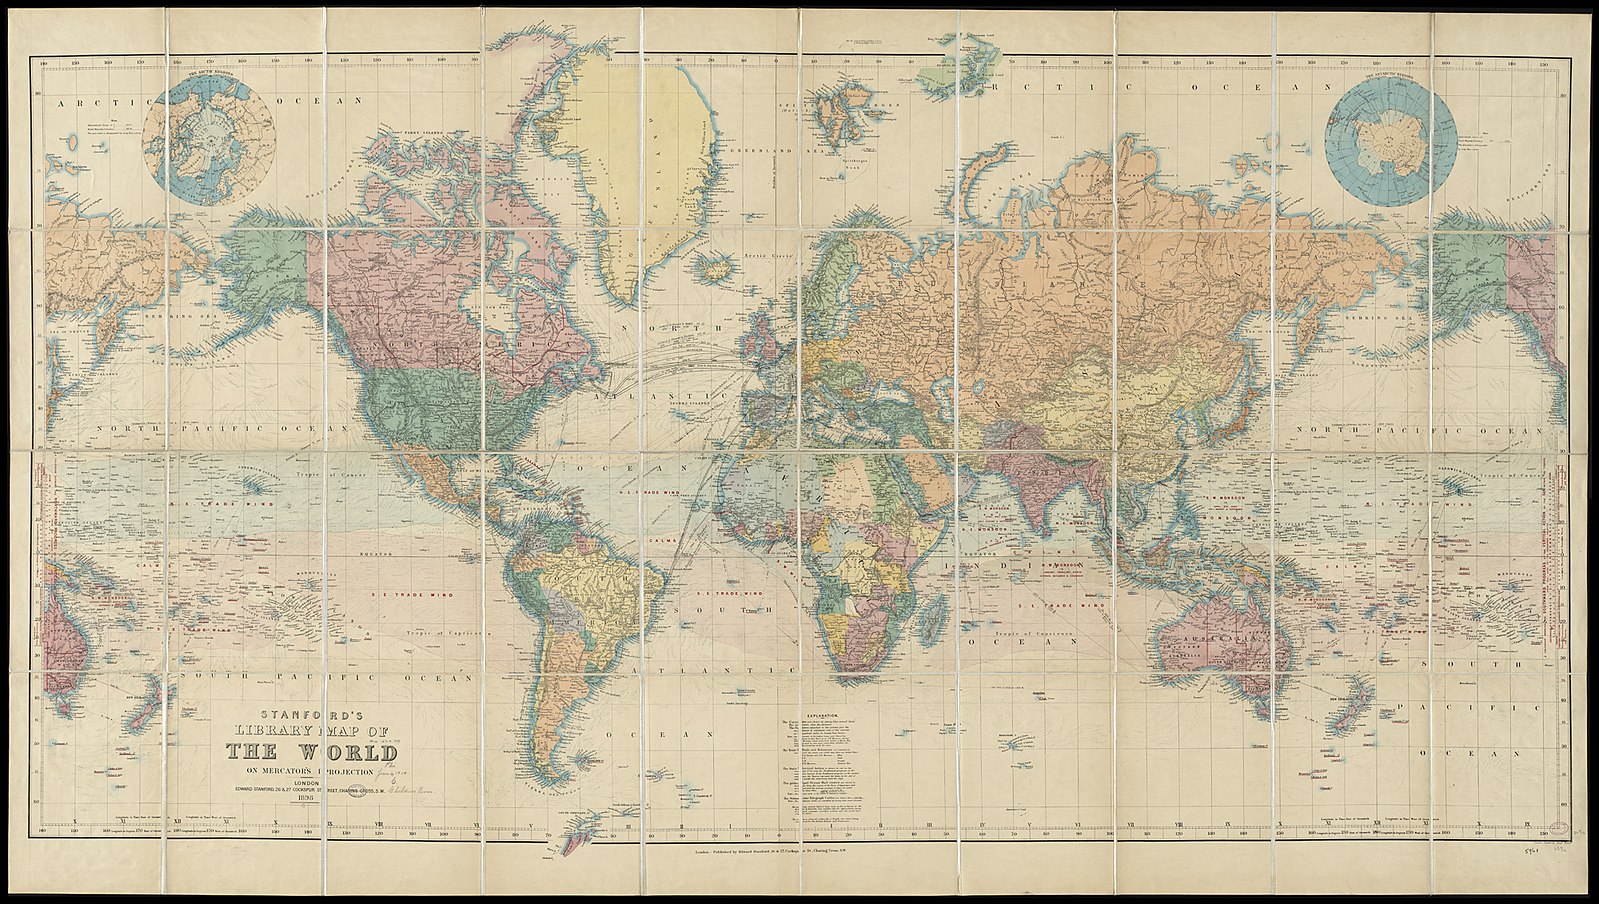 Macerator map of the world according to American Navigators